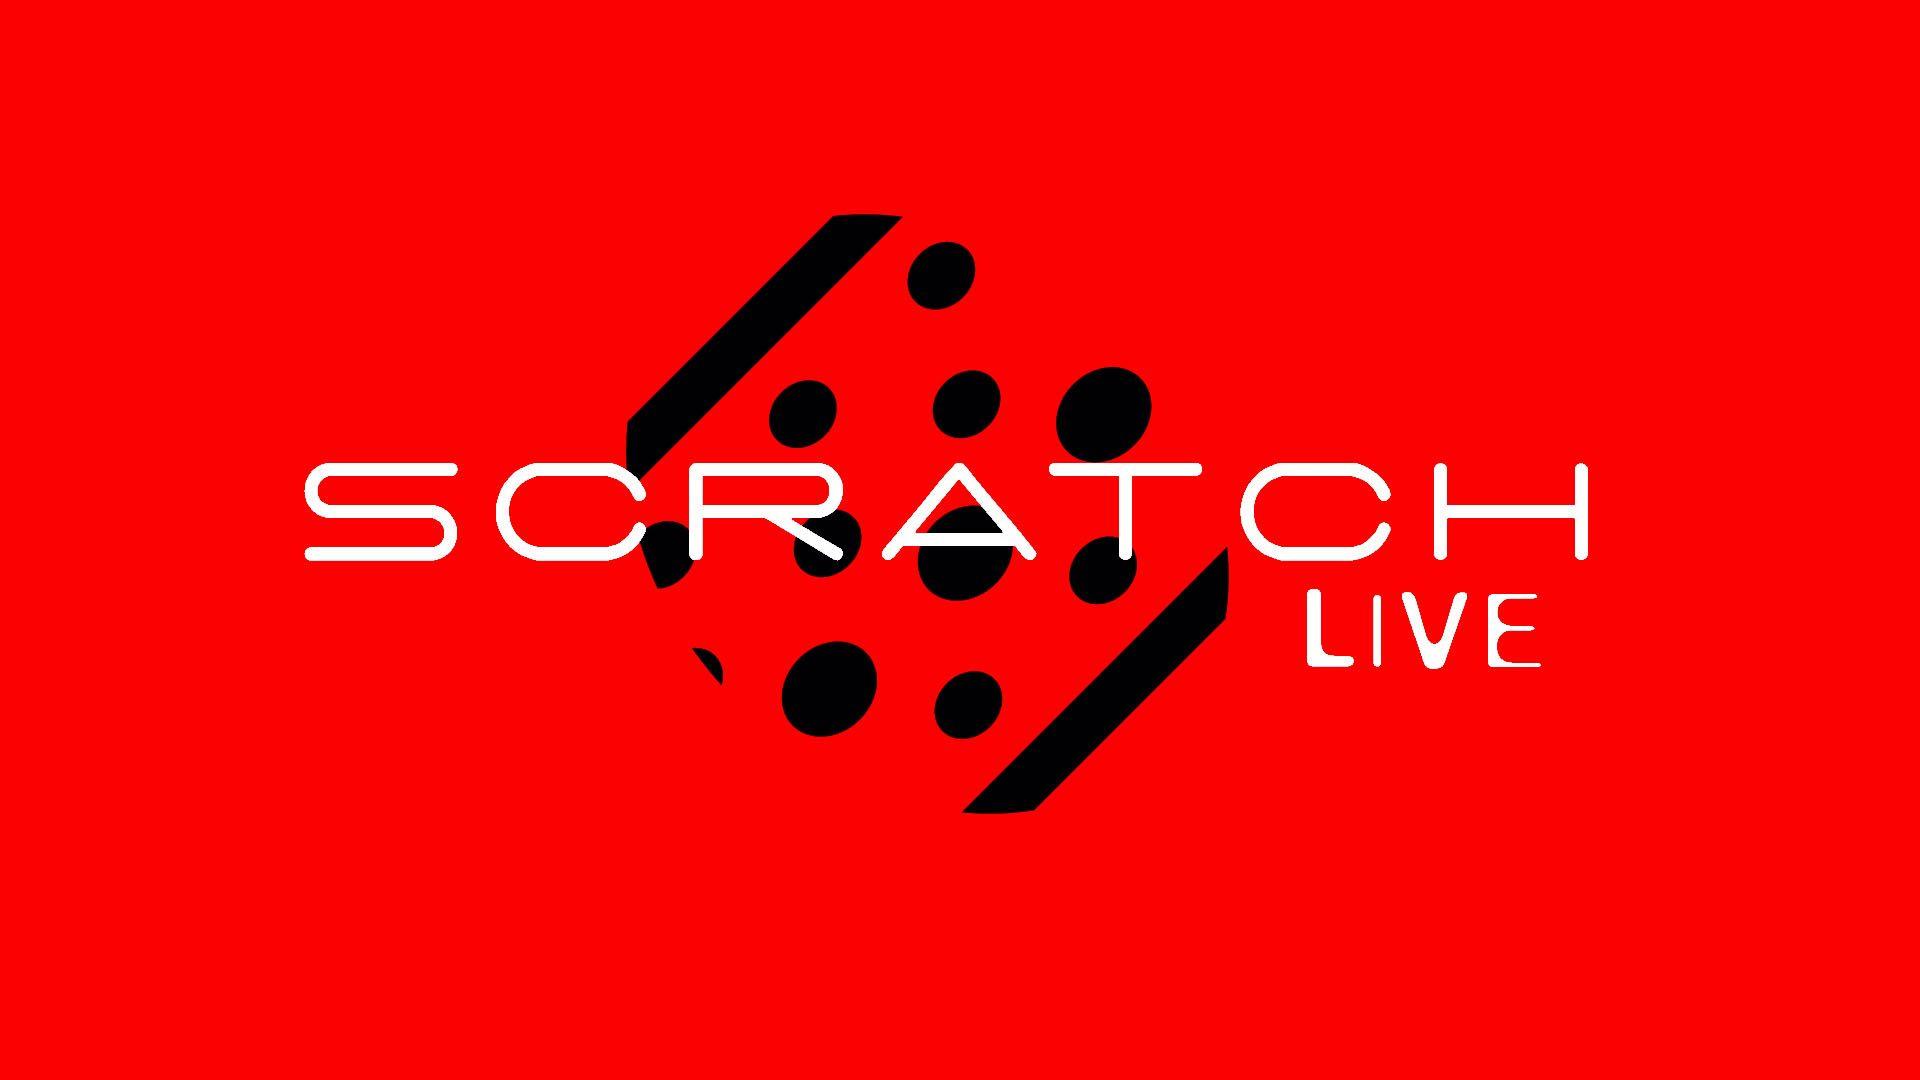 download serato scratch live for windows 7